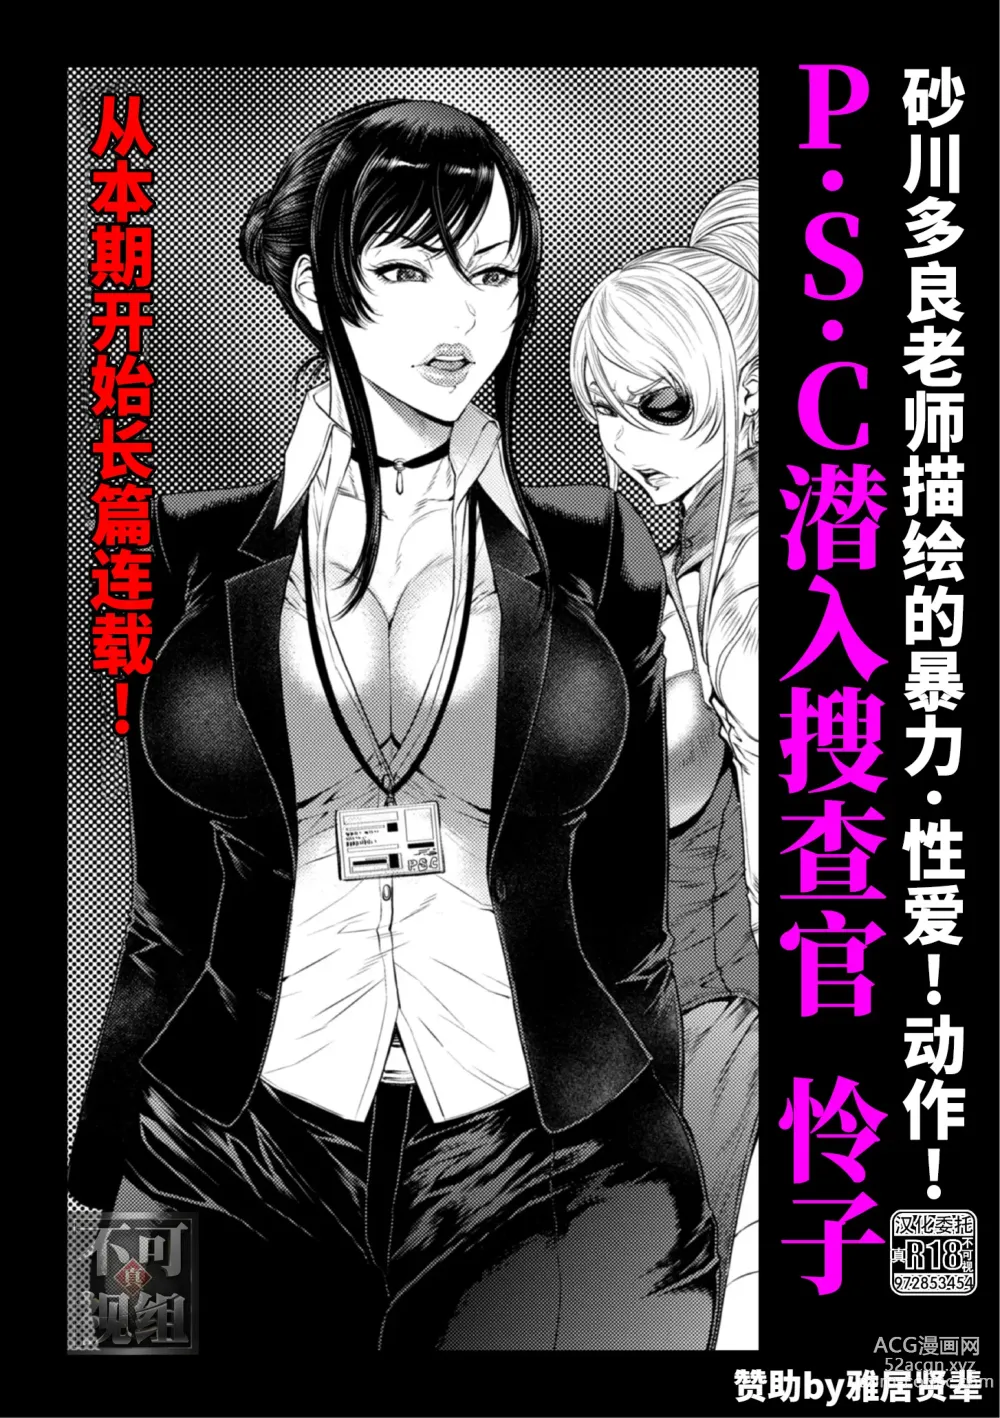 Page 1 of manga P.S.C Sennyuu Sousakan Reiko 1